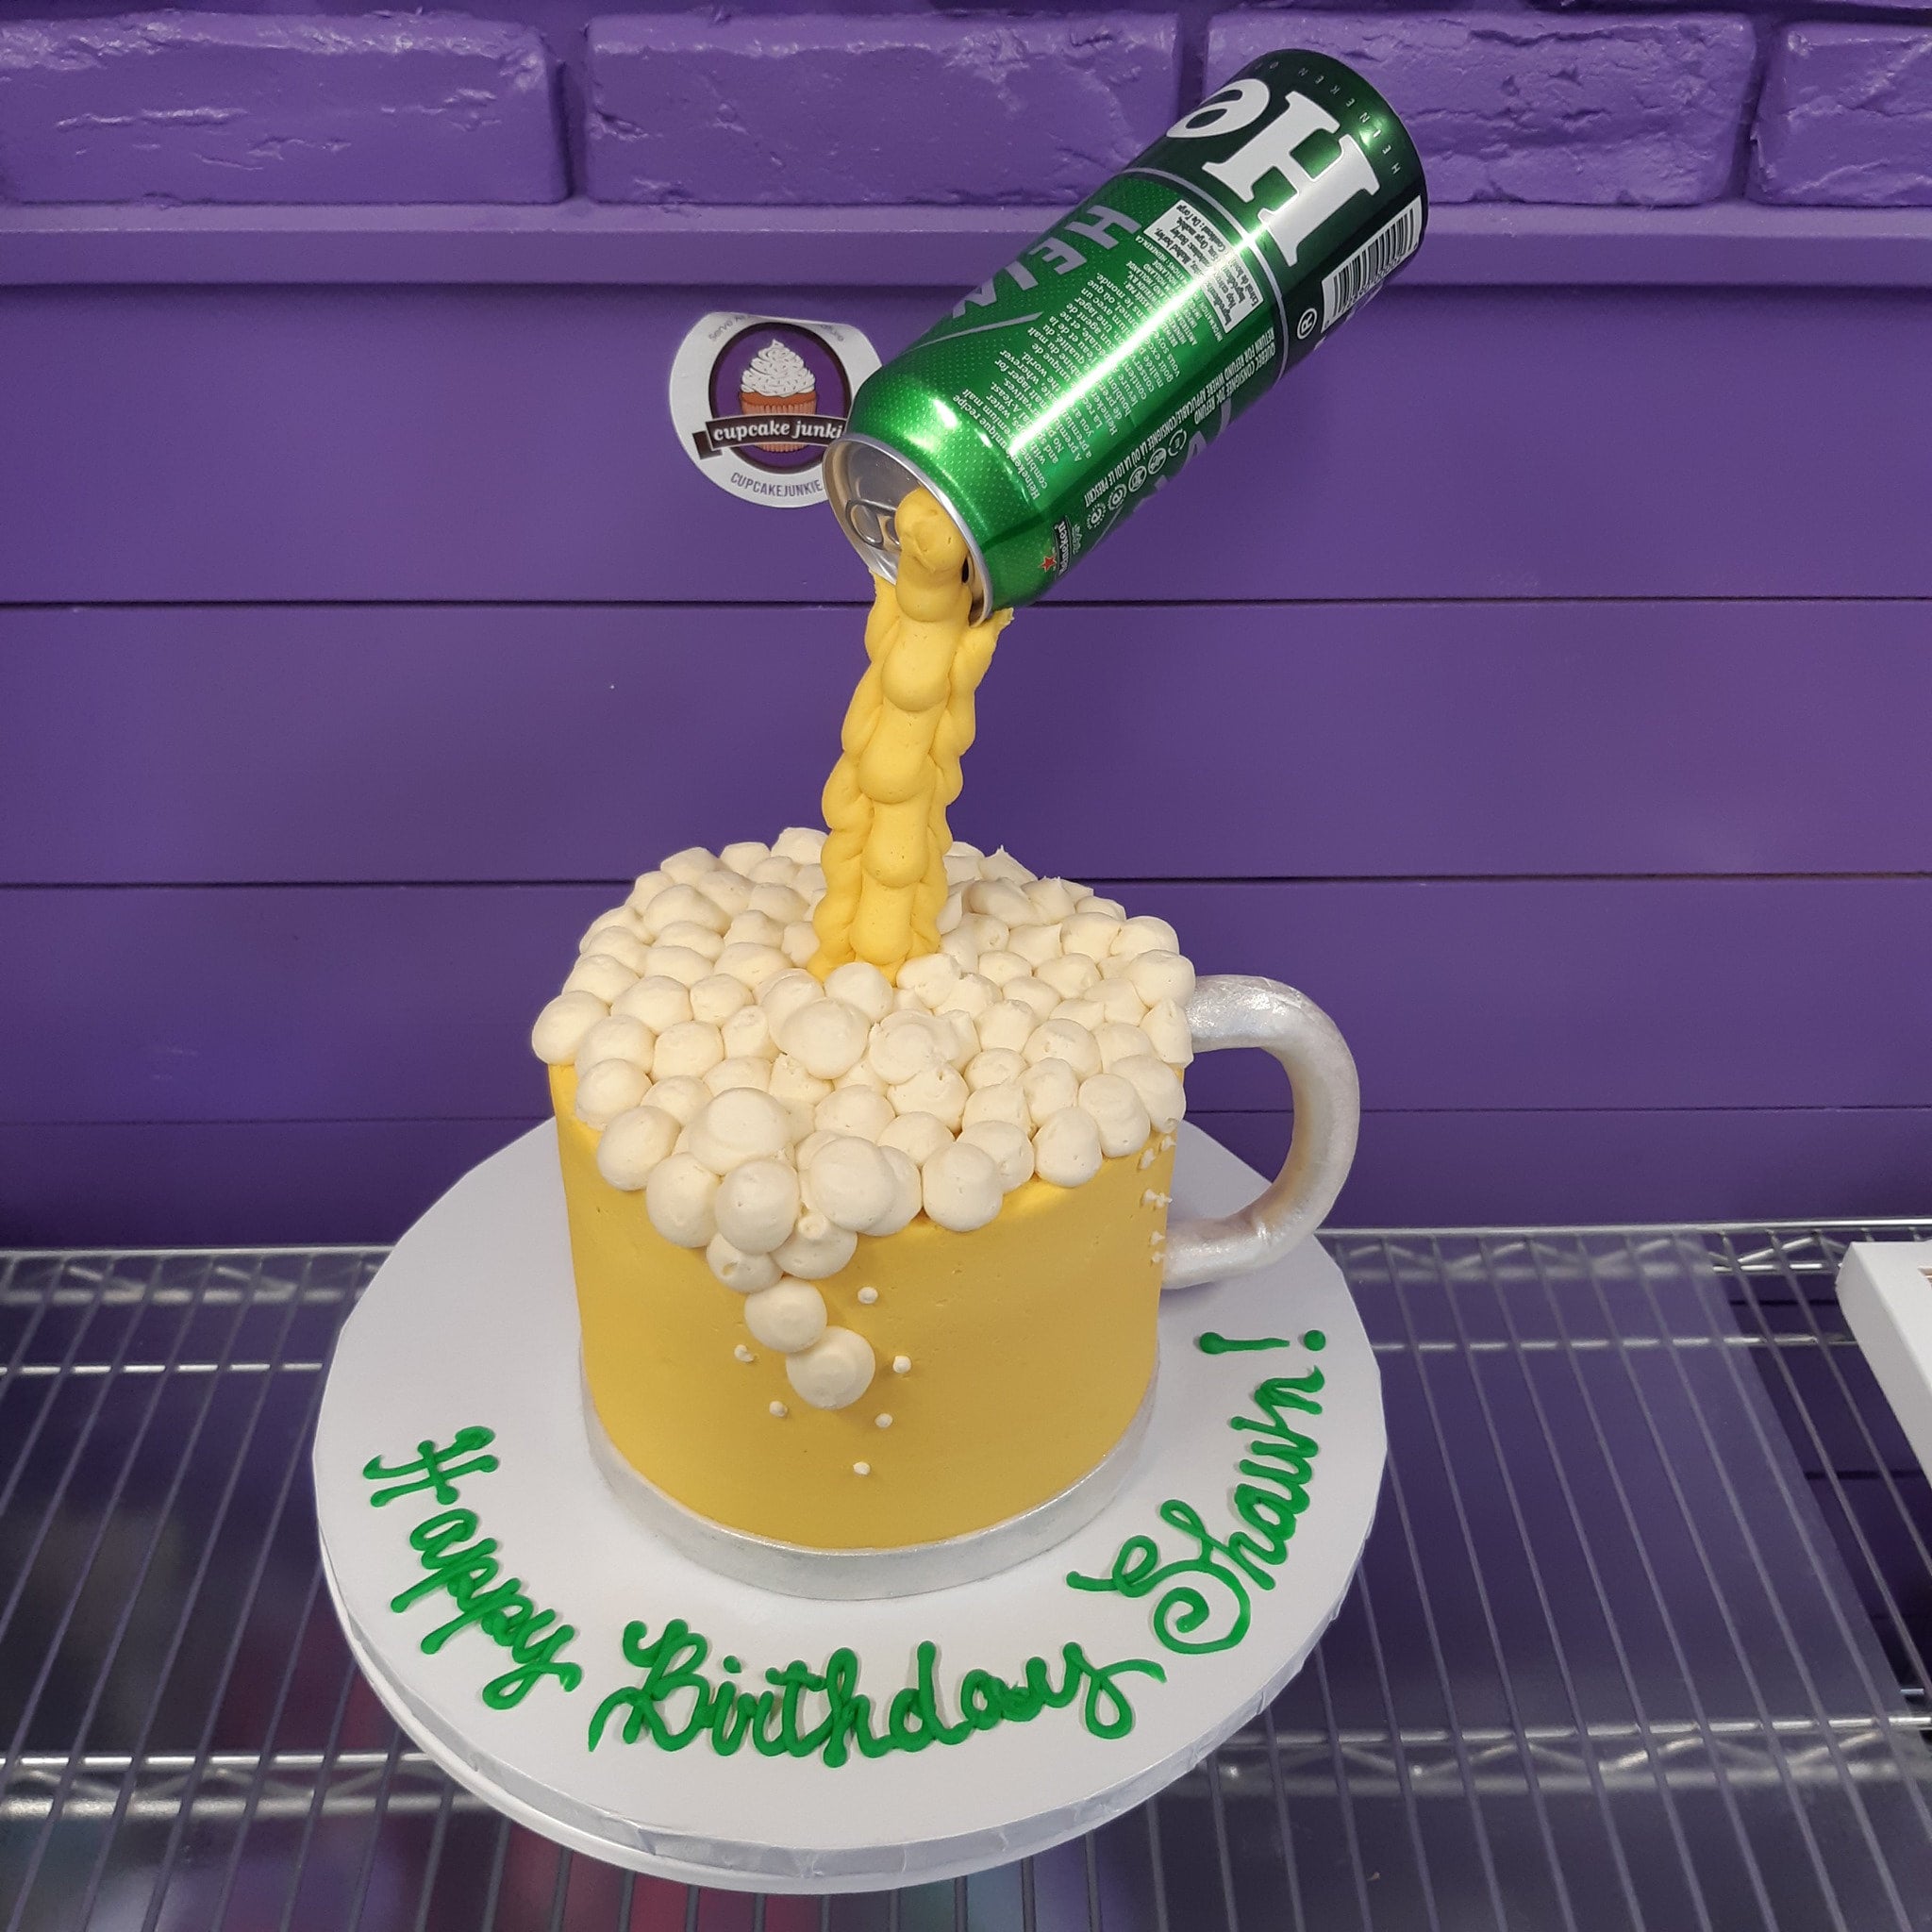 Beer mug cake and... - The Paisley Pair: Cupcakes & Cakes | Facebook